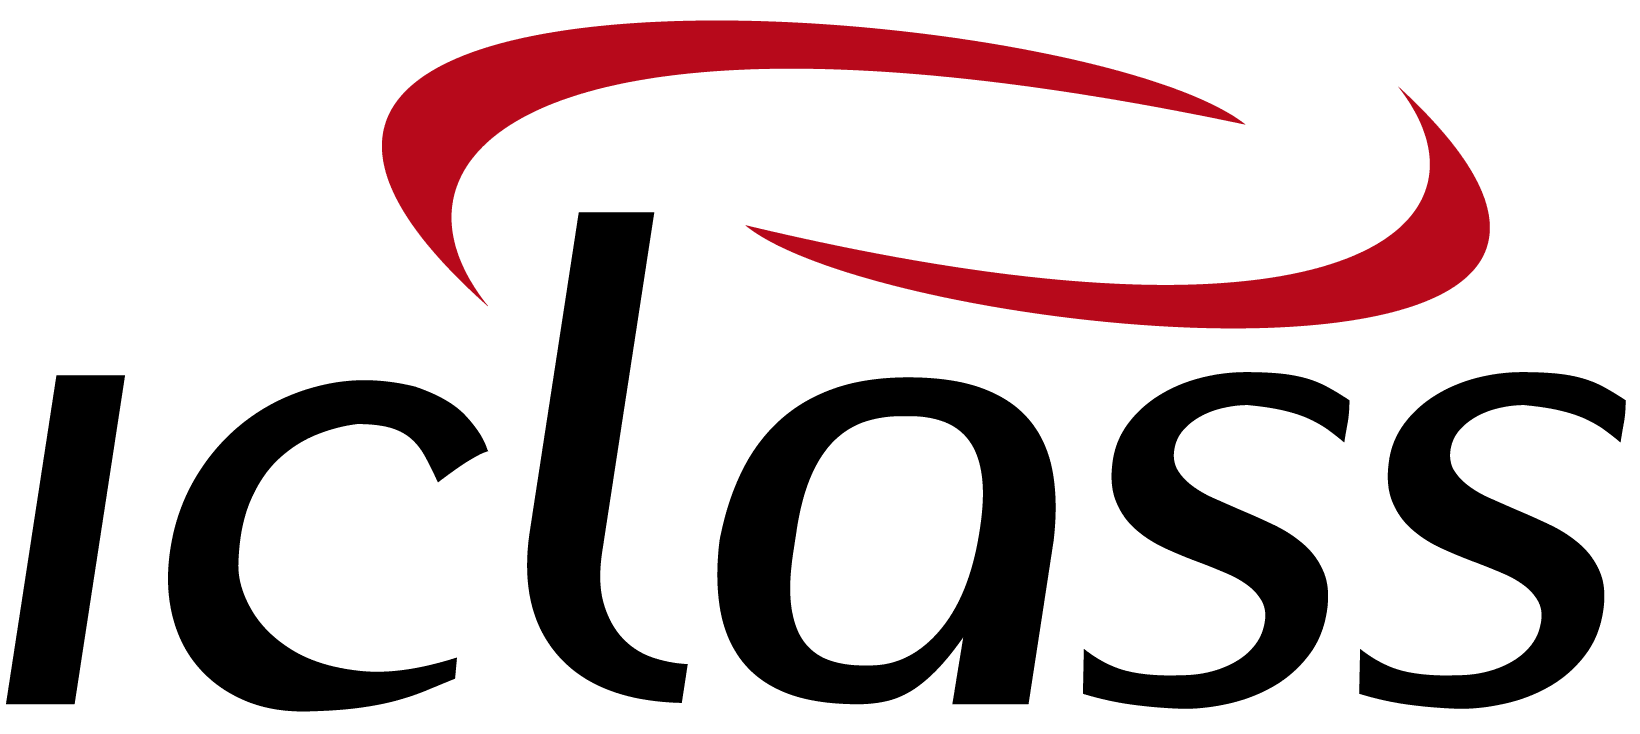 logo IClass Software de Ordem de Serviço Online Contato